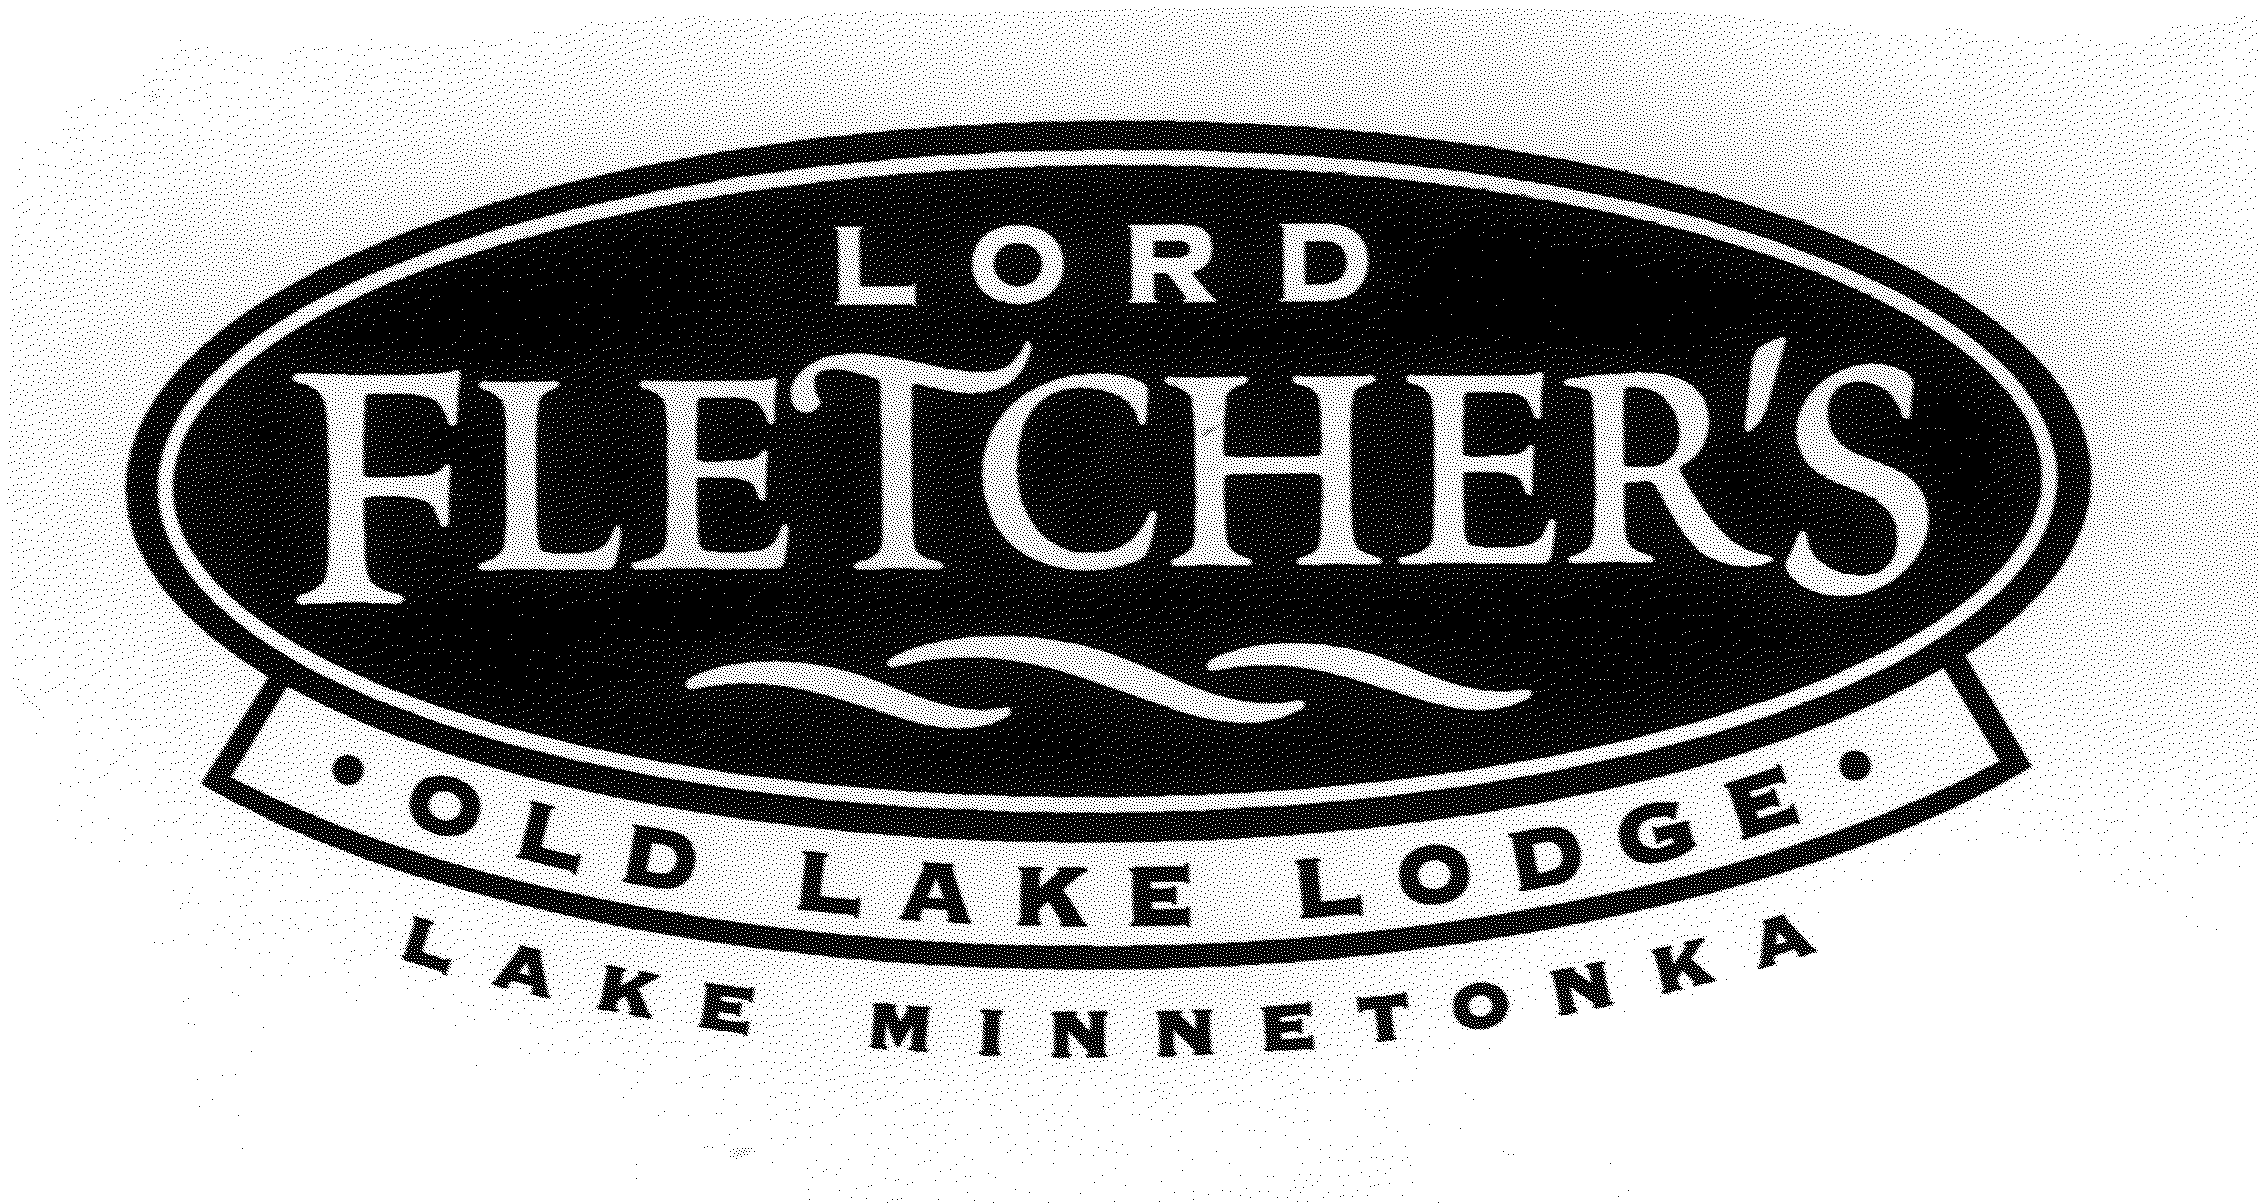  LORD FLETCHER'S OLD LAKE LODGE LAKE MINNETONKA